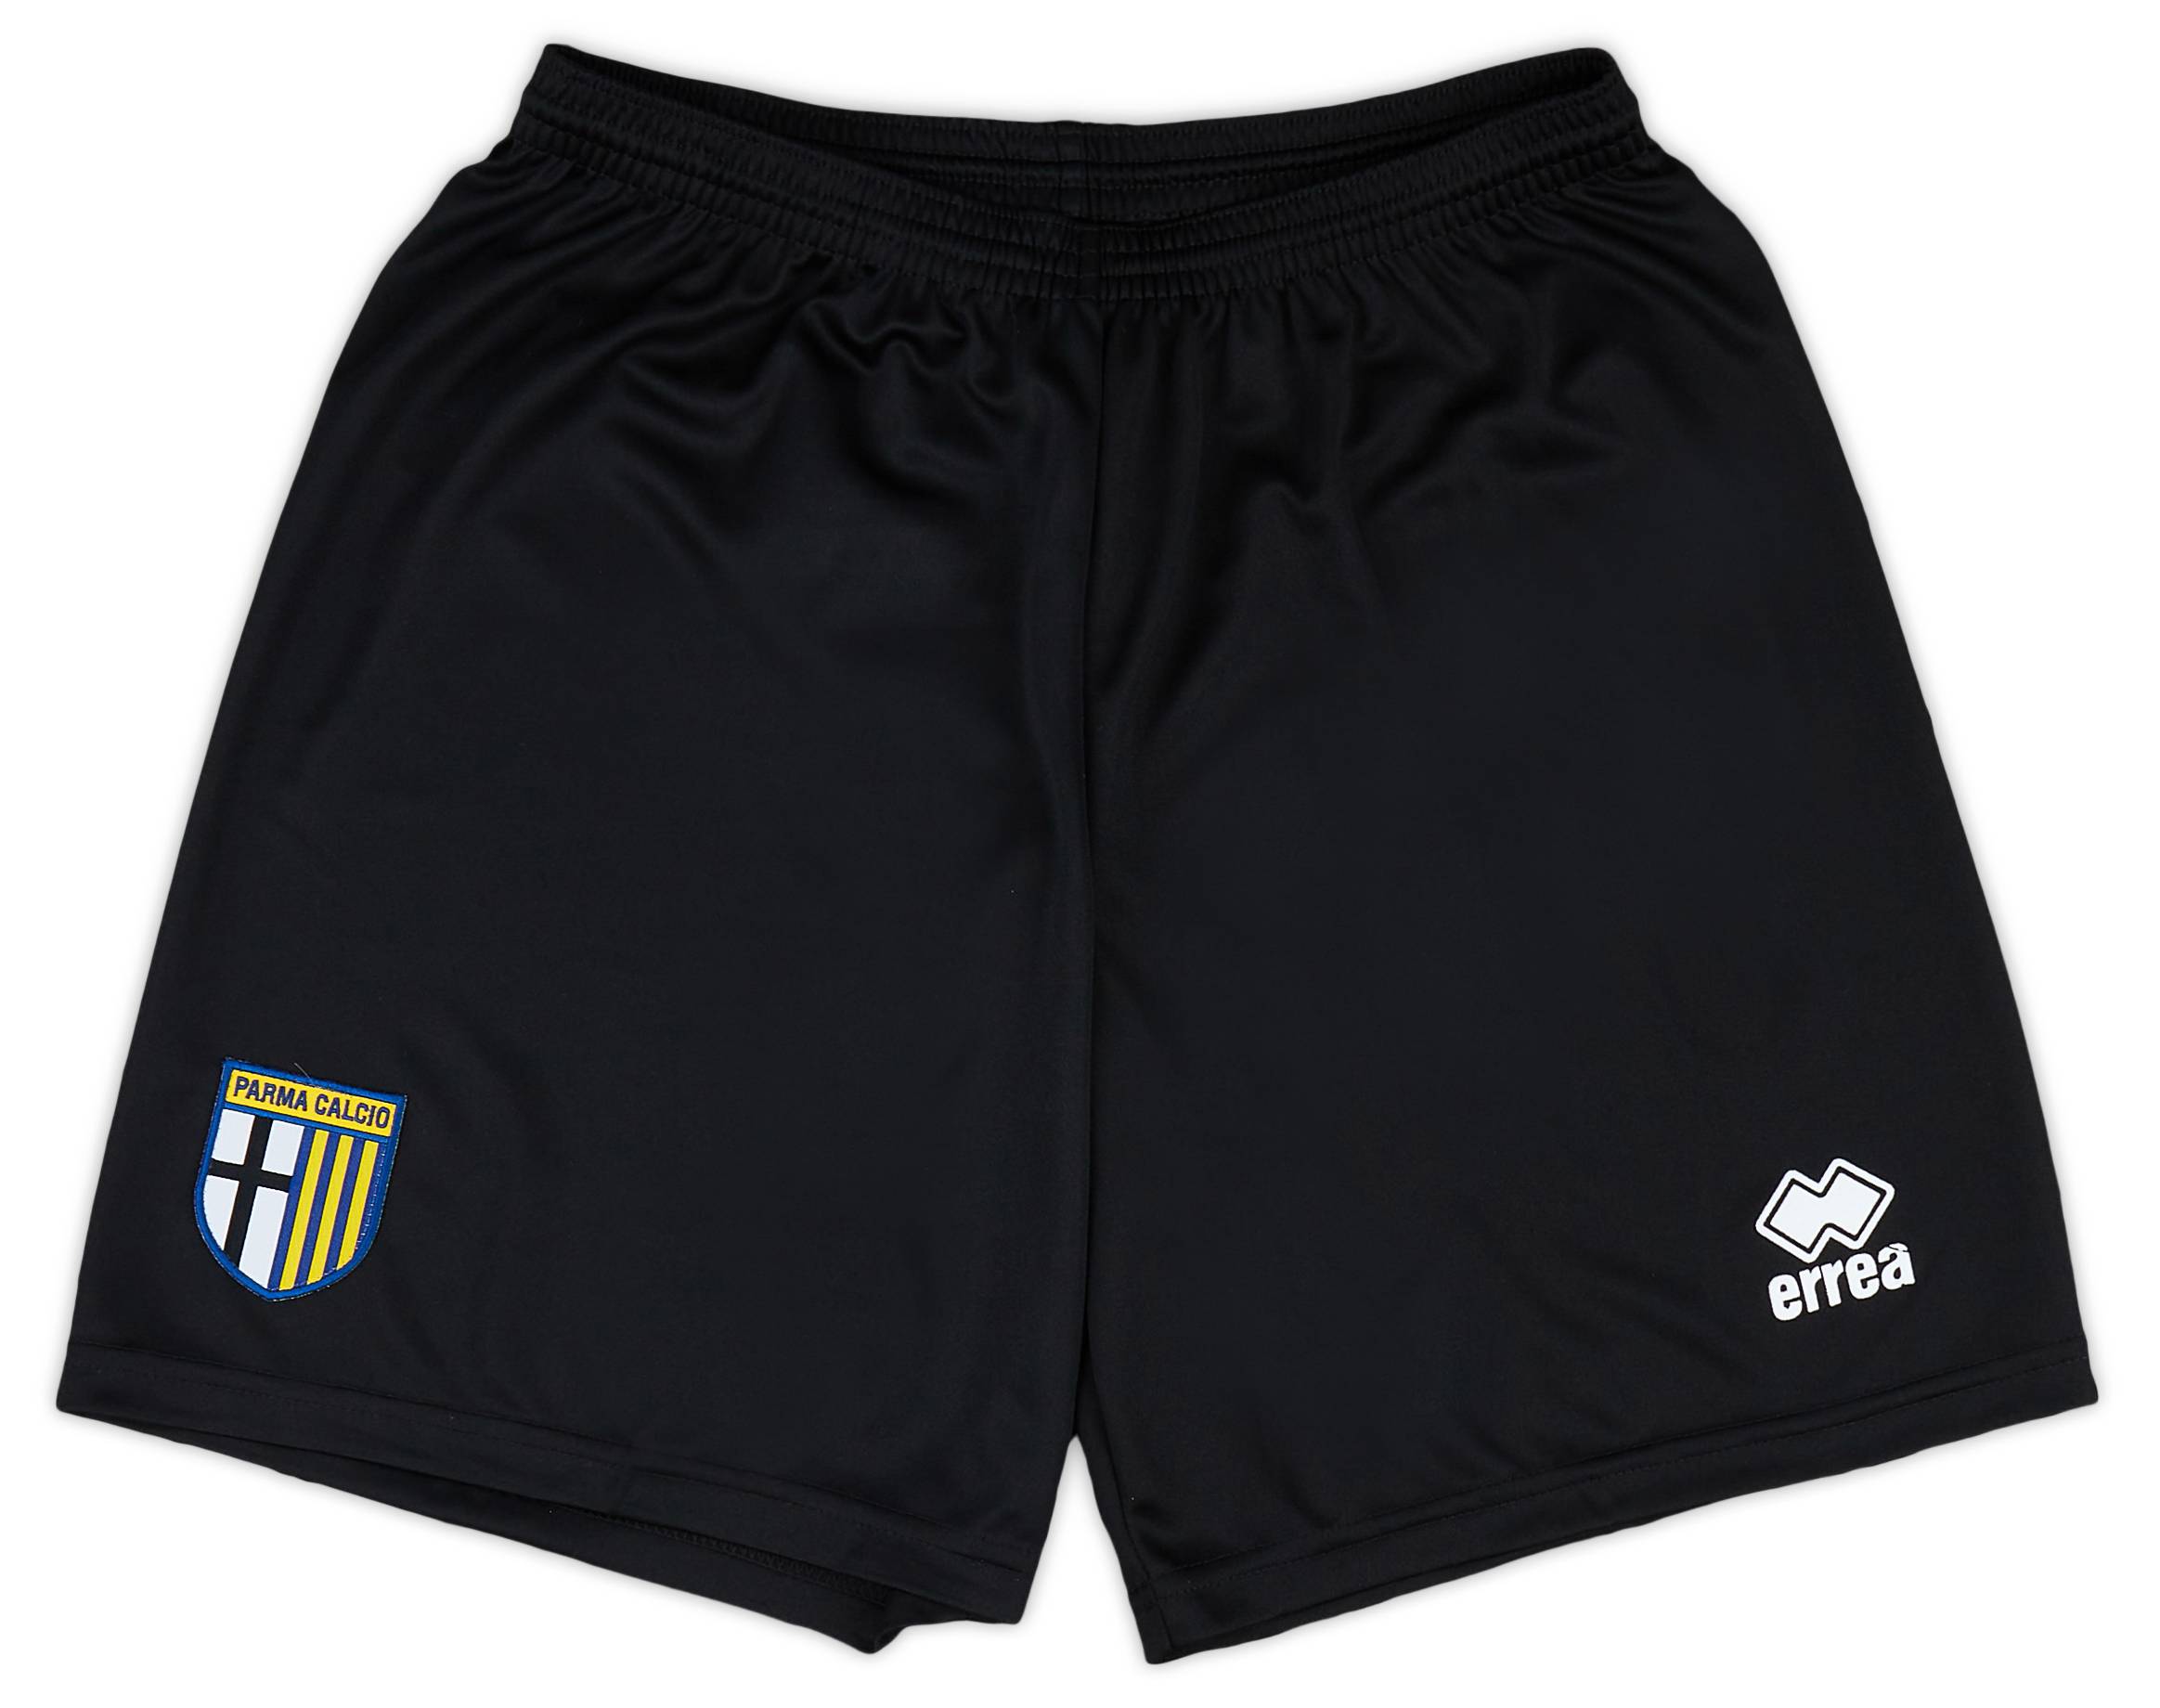 2020-21 Parma Errea Training Shorts